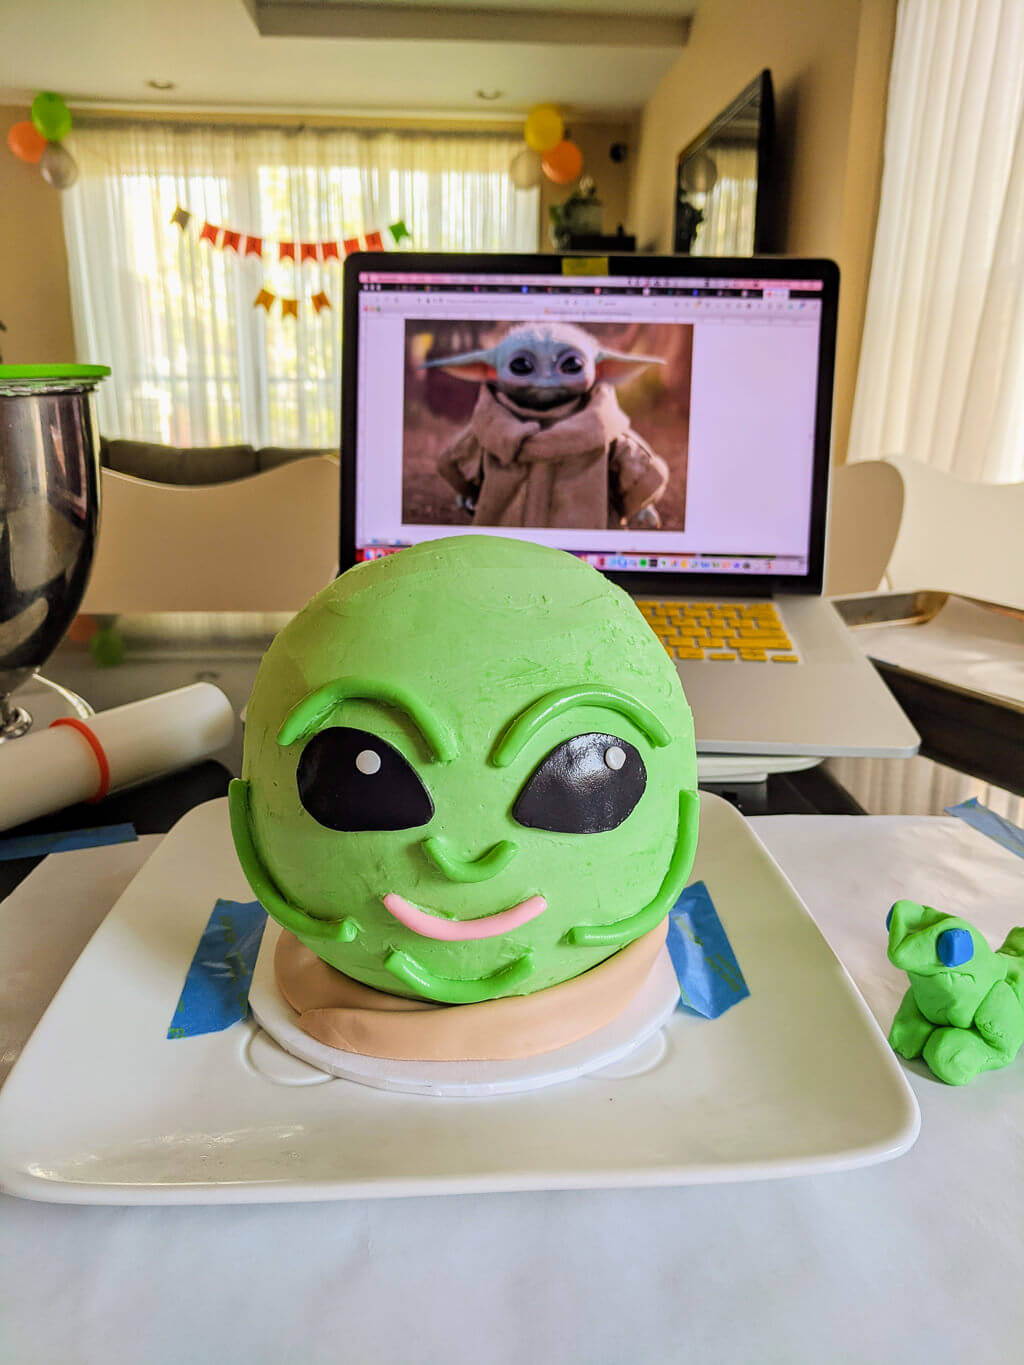 Making a DIY Baby Yoda cake with printable ears